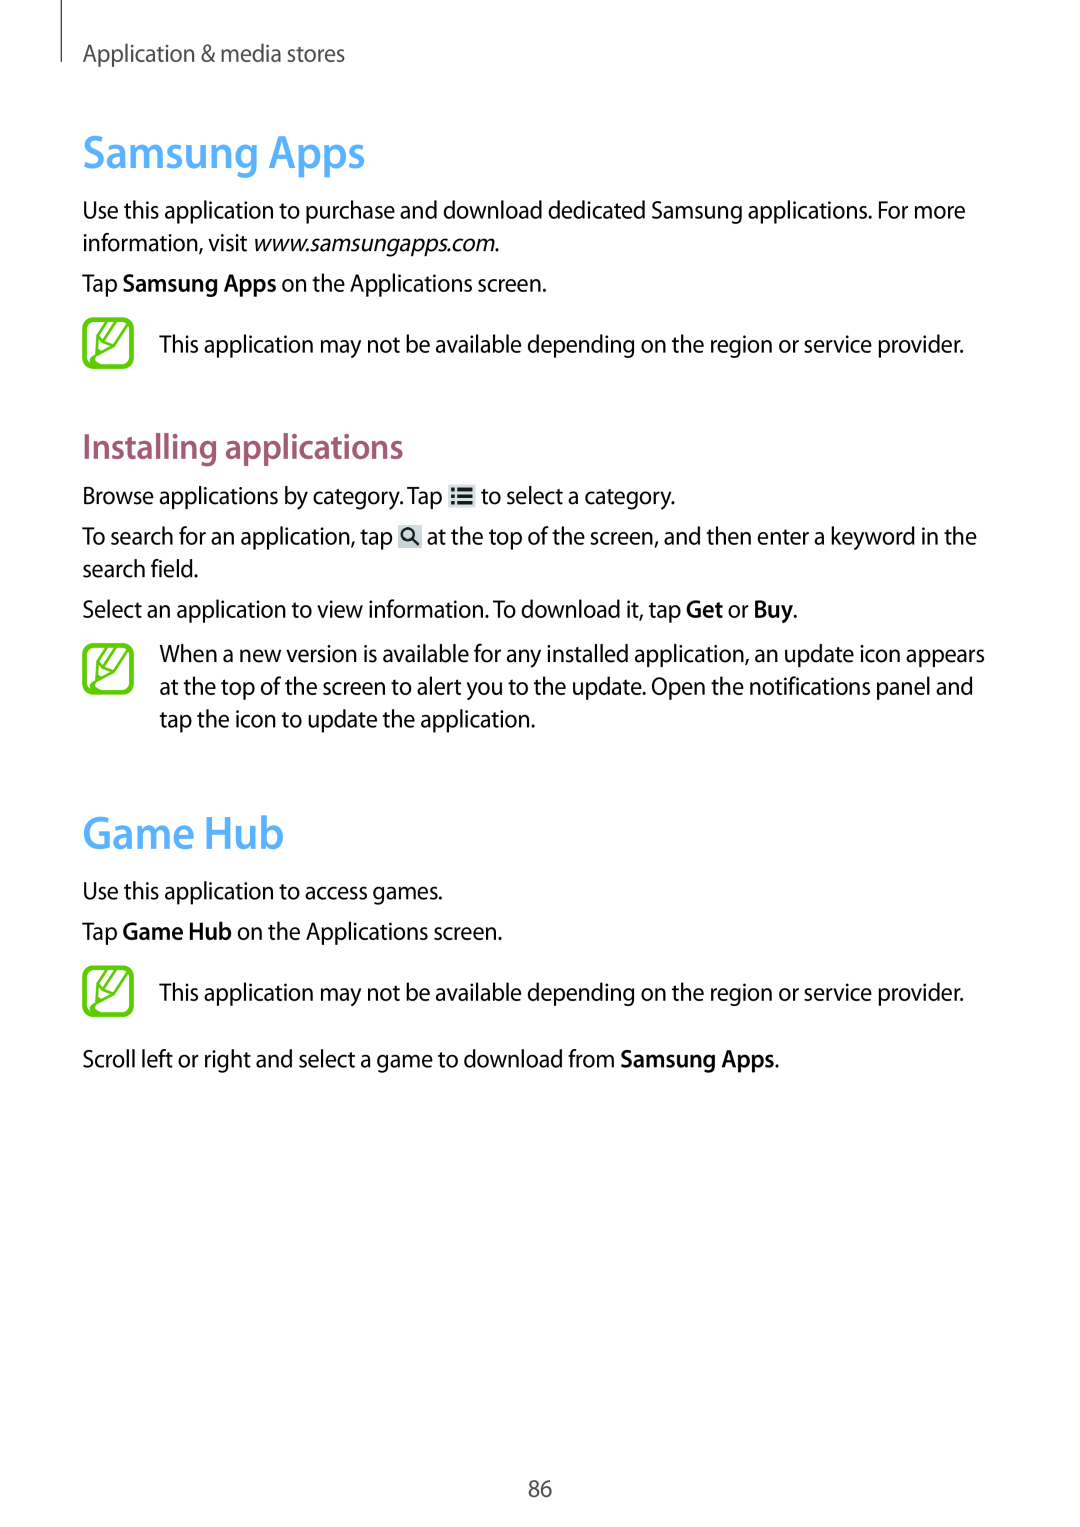 Samsung GT-N5100 user manual Samsung Apps, Game Hub, Application & media stores, Installing applications 